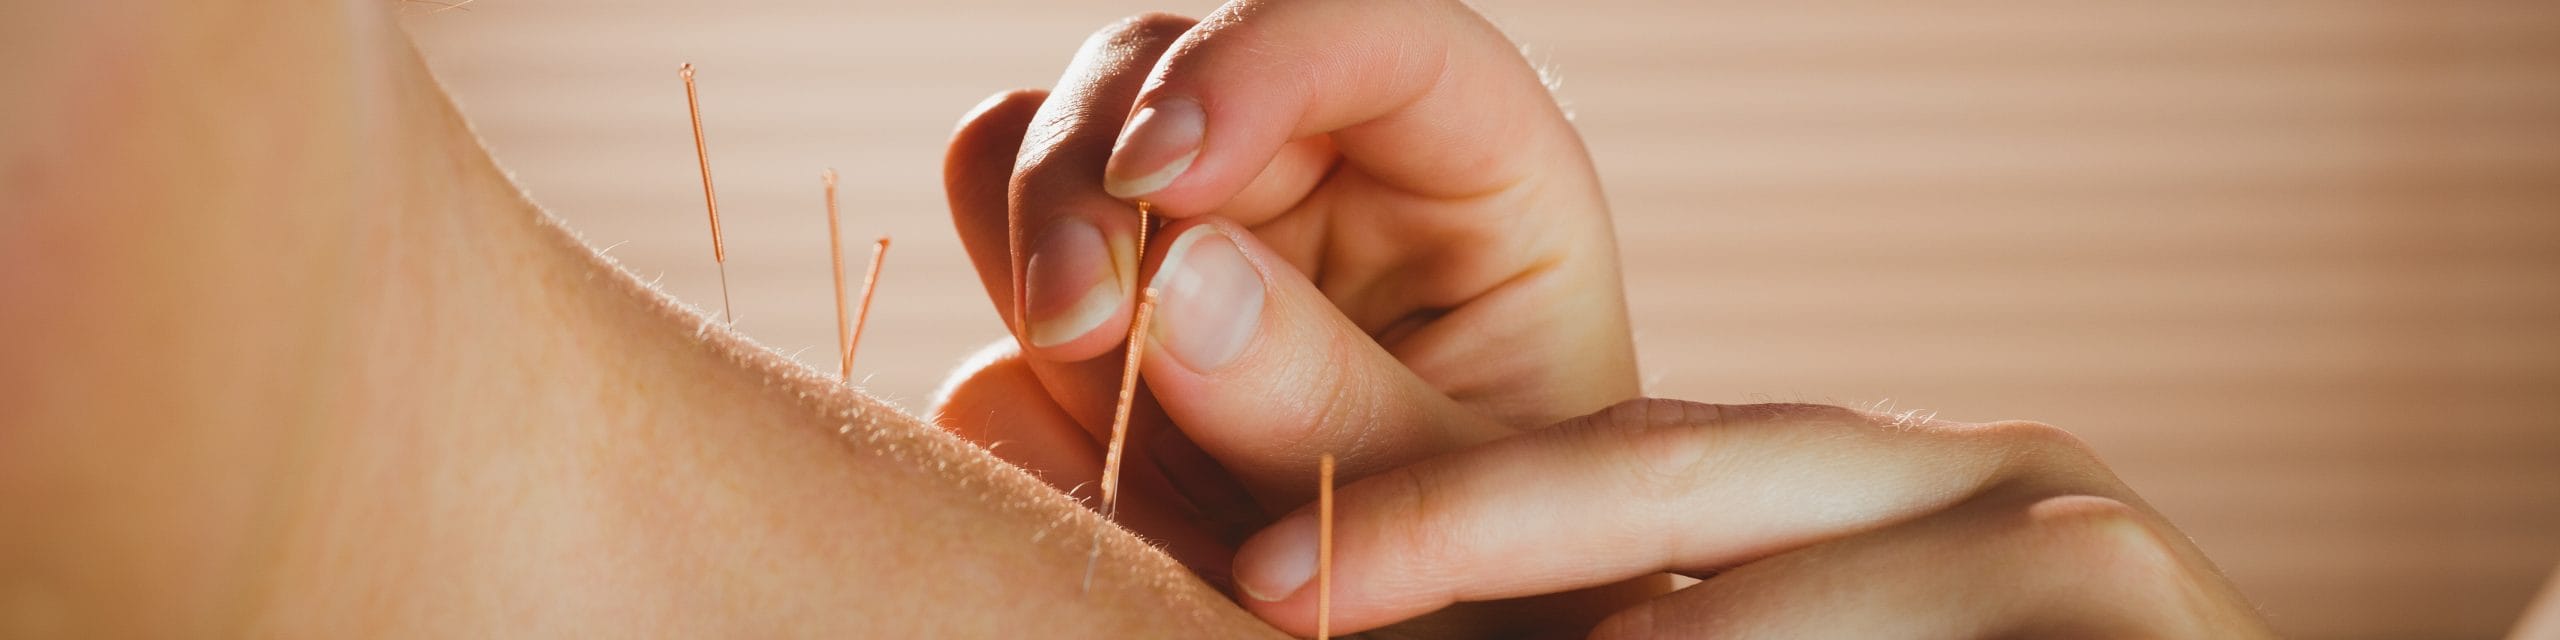 Akupunktur als Alternative zur Schmerzbehandlung